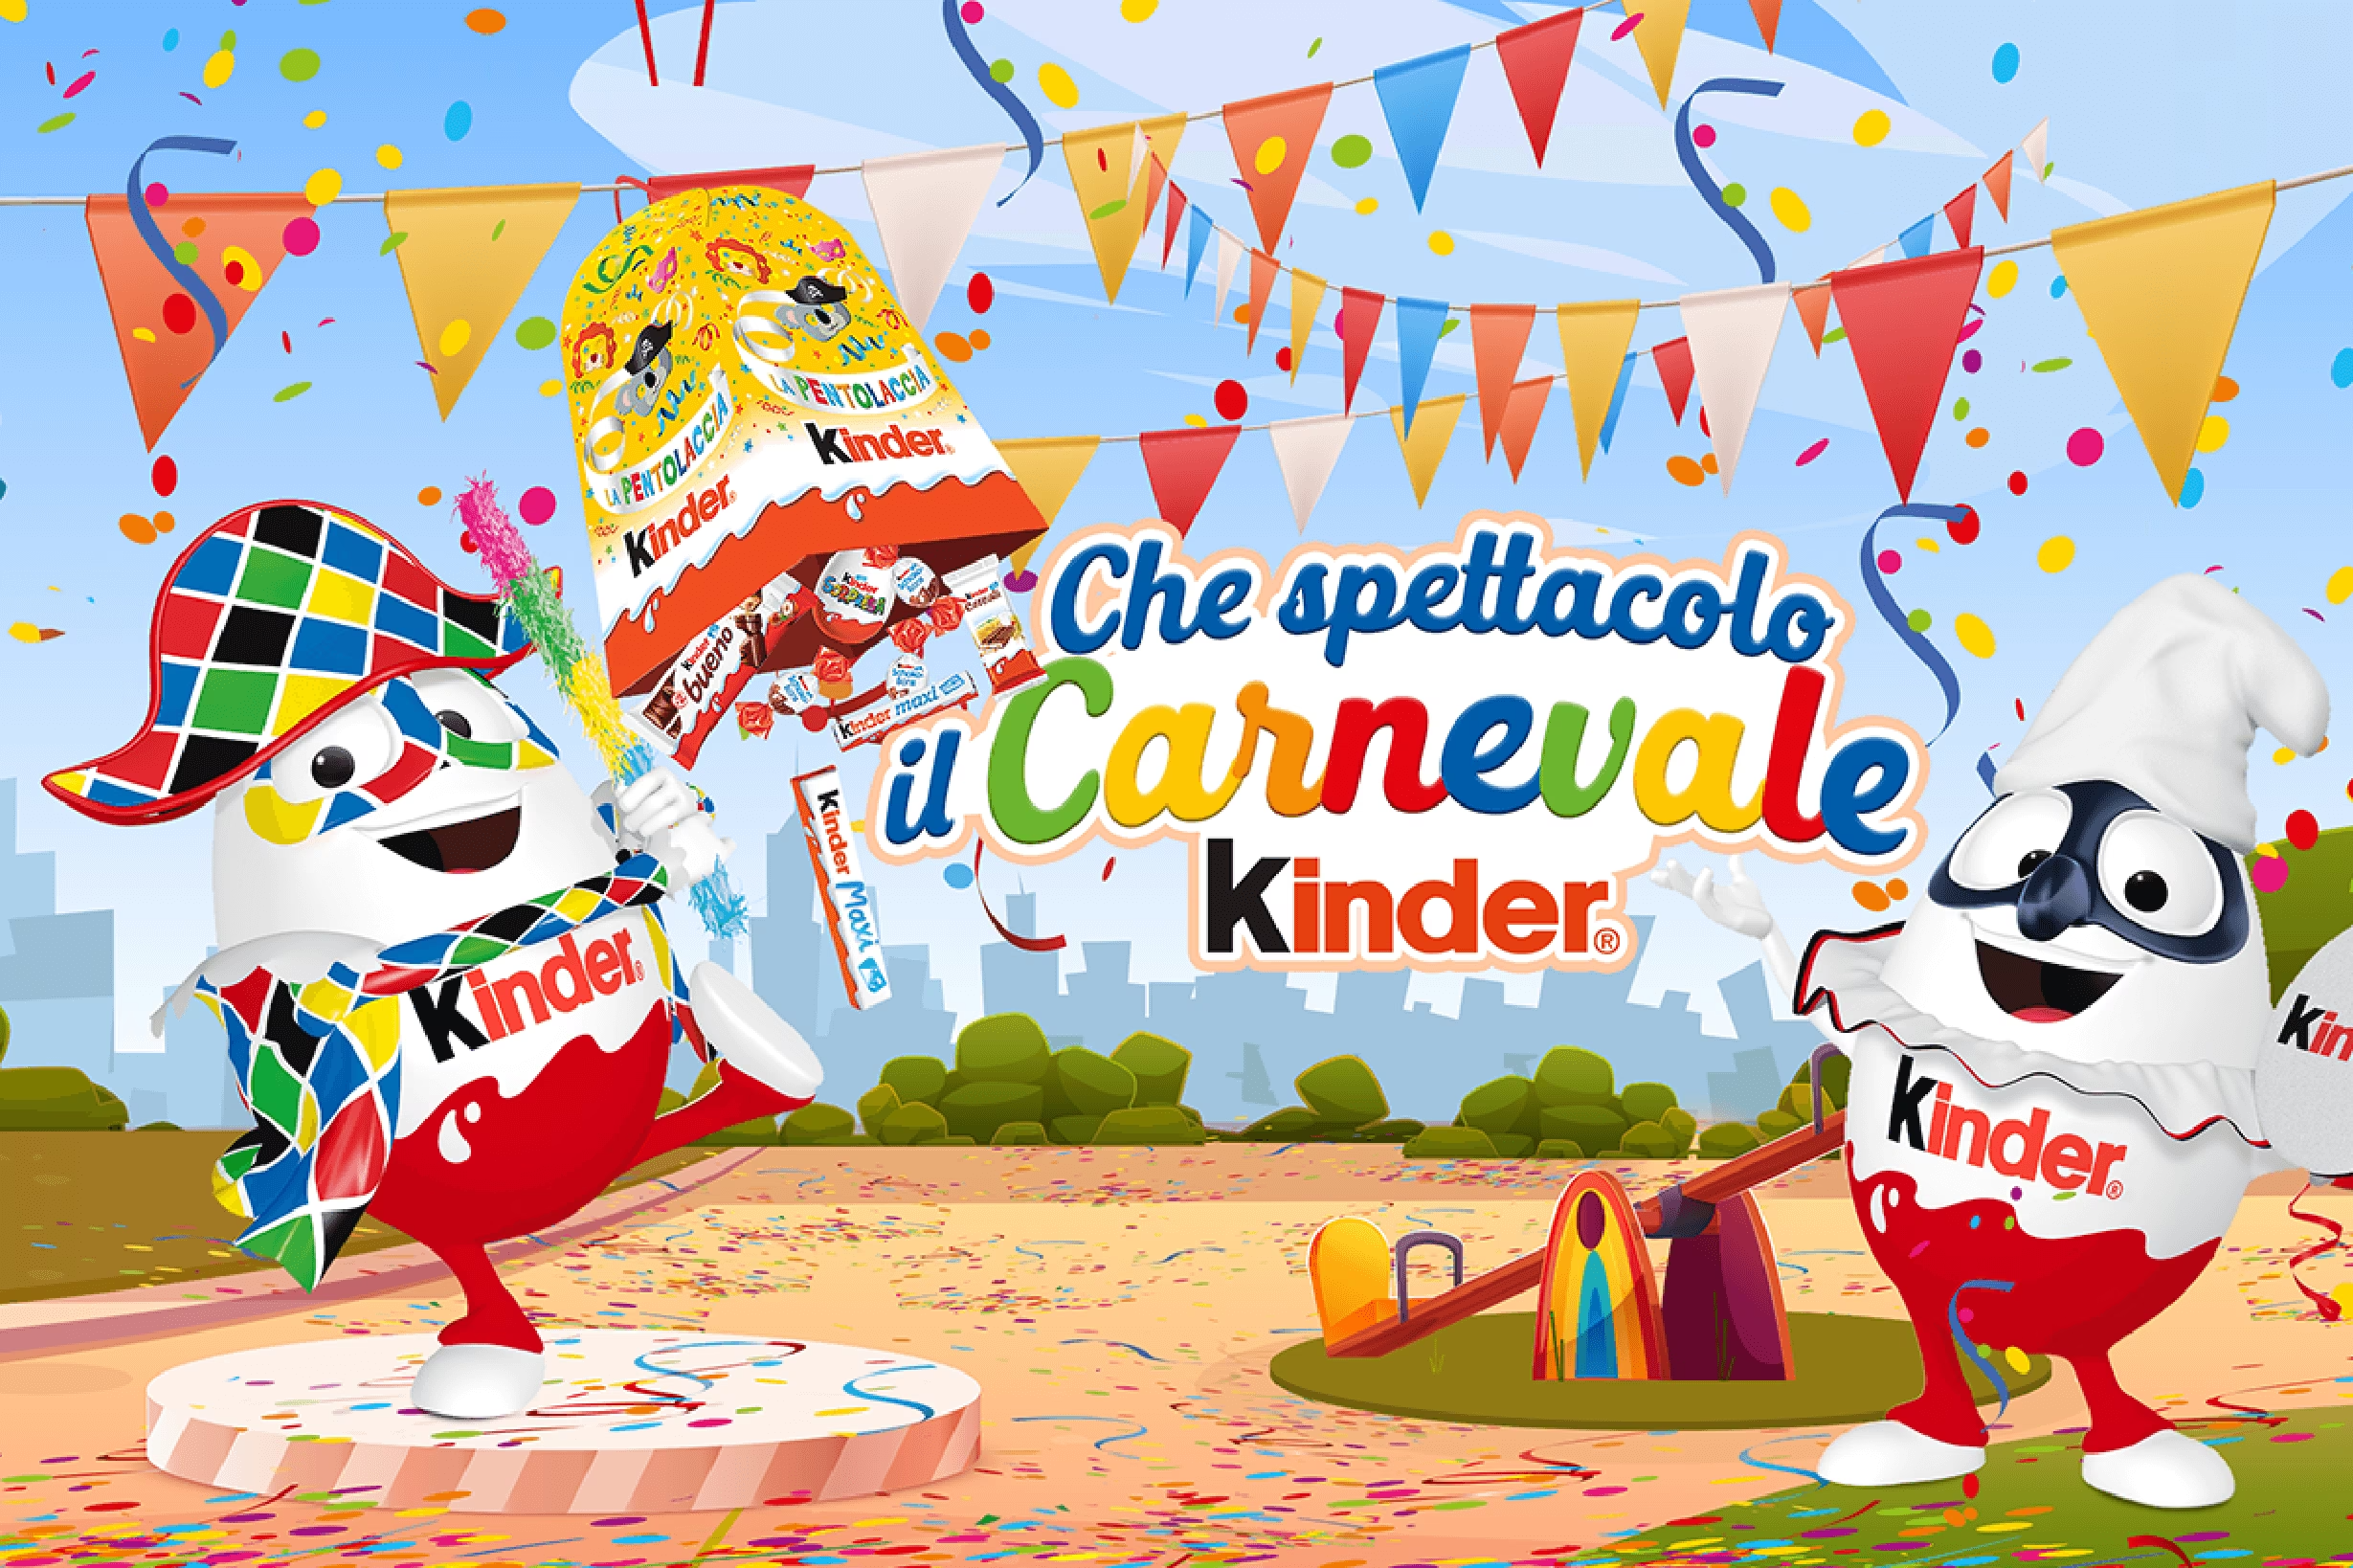 Carnevale Kinder: le date e le città per divertirsi insieme